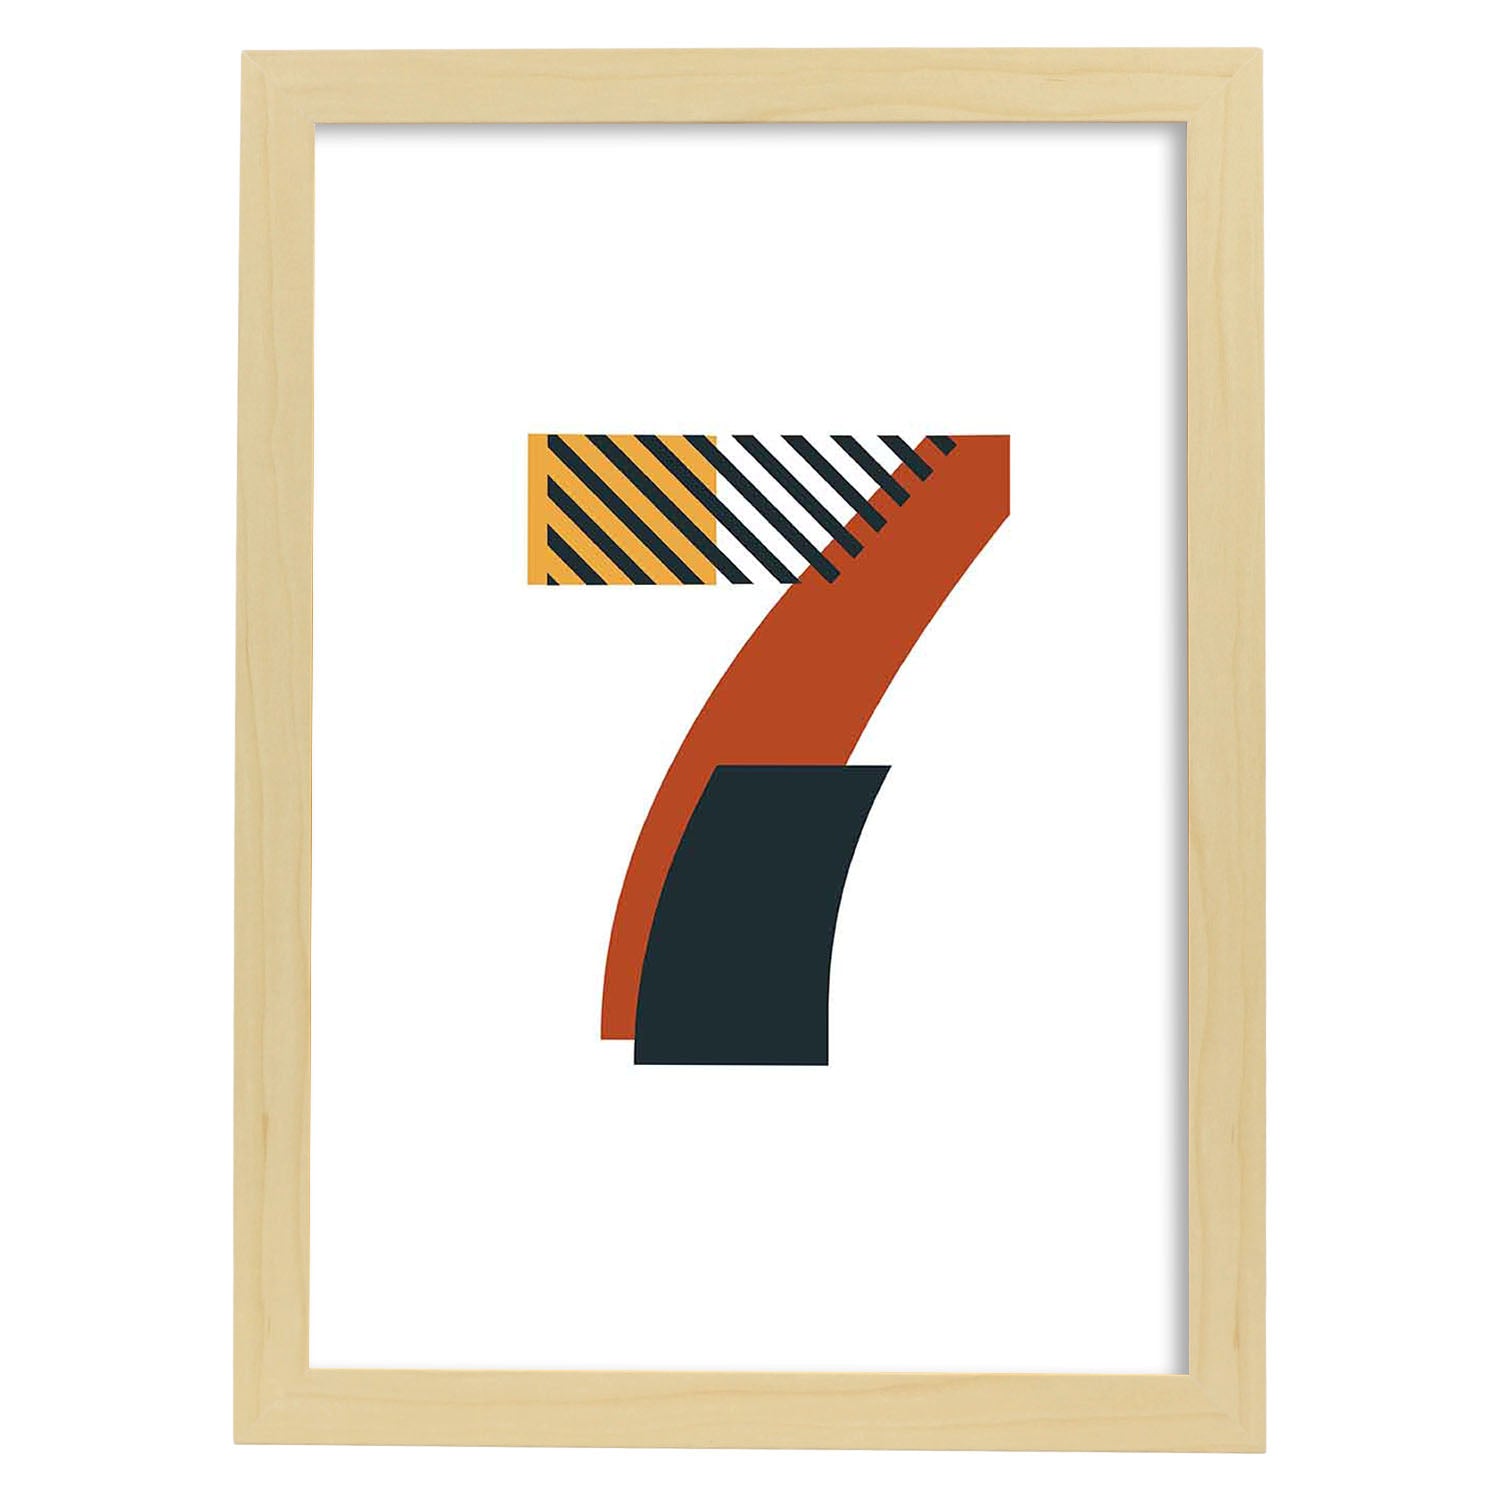 Poster de número 7. Lámina estilo Geometria con imágenes del alfabeto.-Artwork-Nacnic-A3-Marco Madera clara-Nacnic Estudio SL